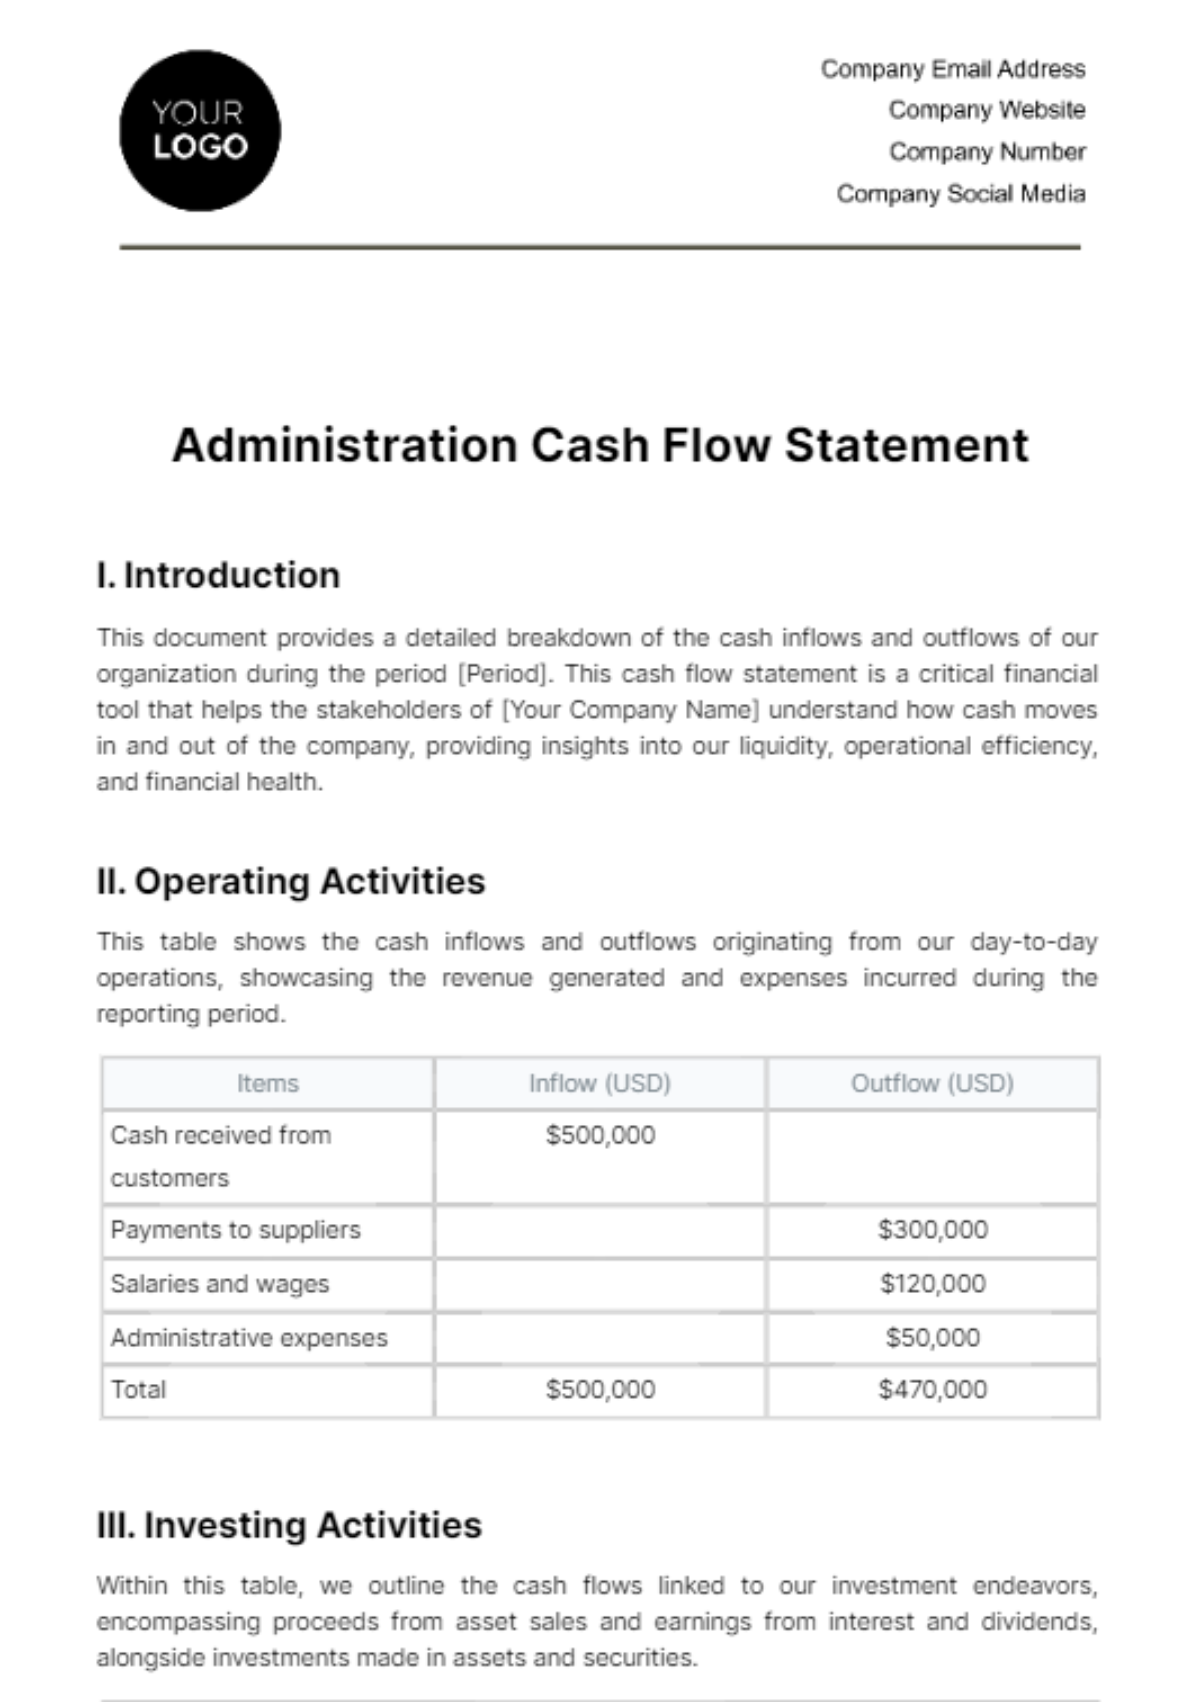 Administration Cash Flow Statement Template